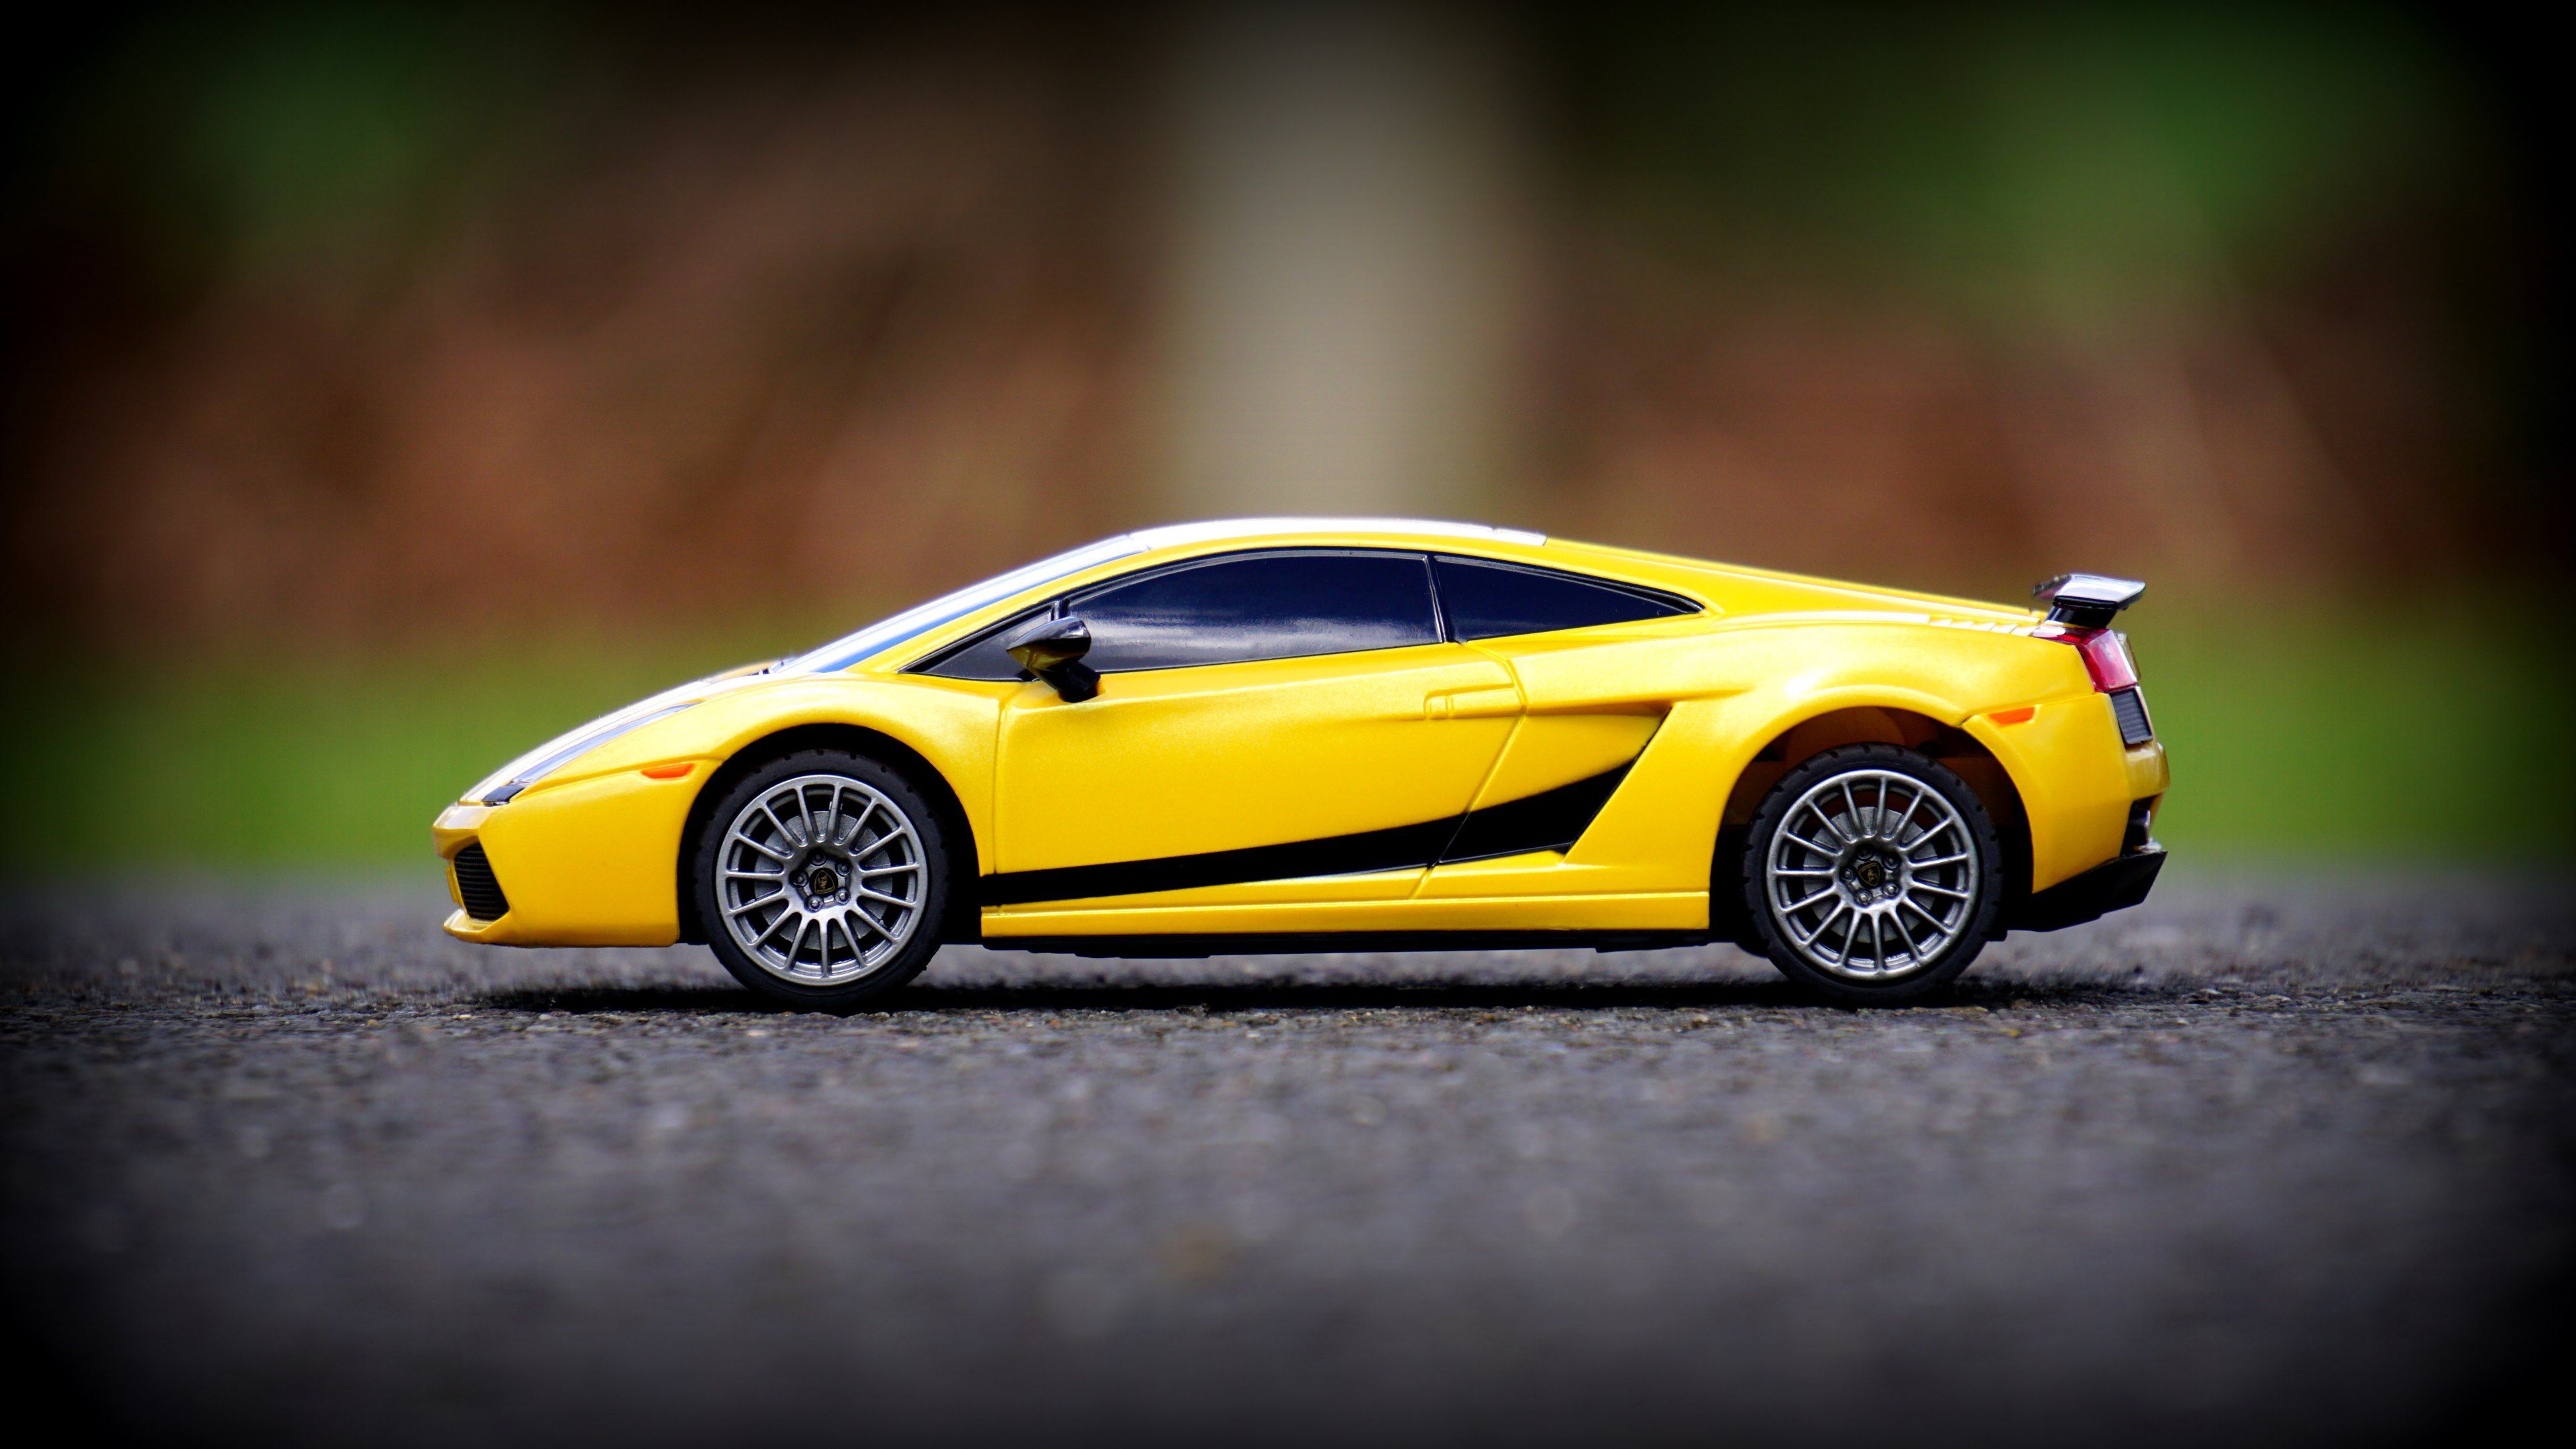 Lamborghini Toy Car 4k Wallpaper. Cars Wallpaper. Sports car, Car, Toy car